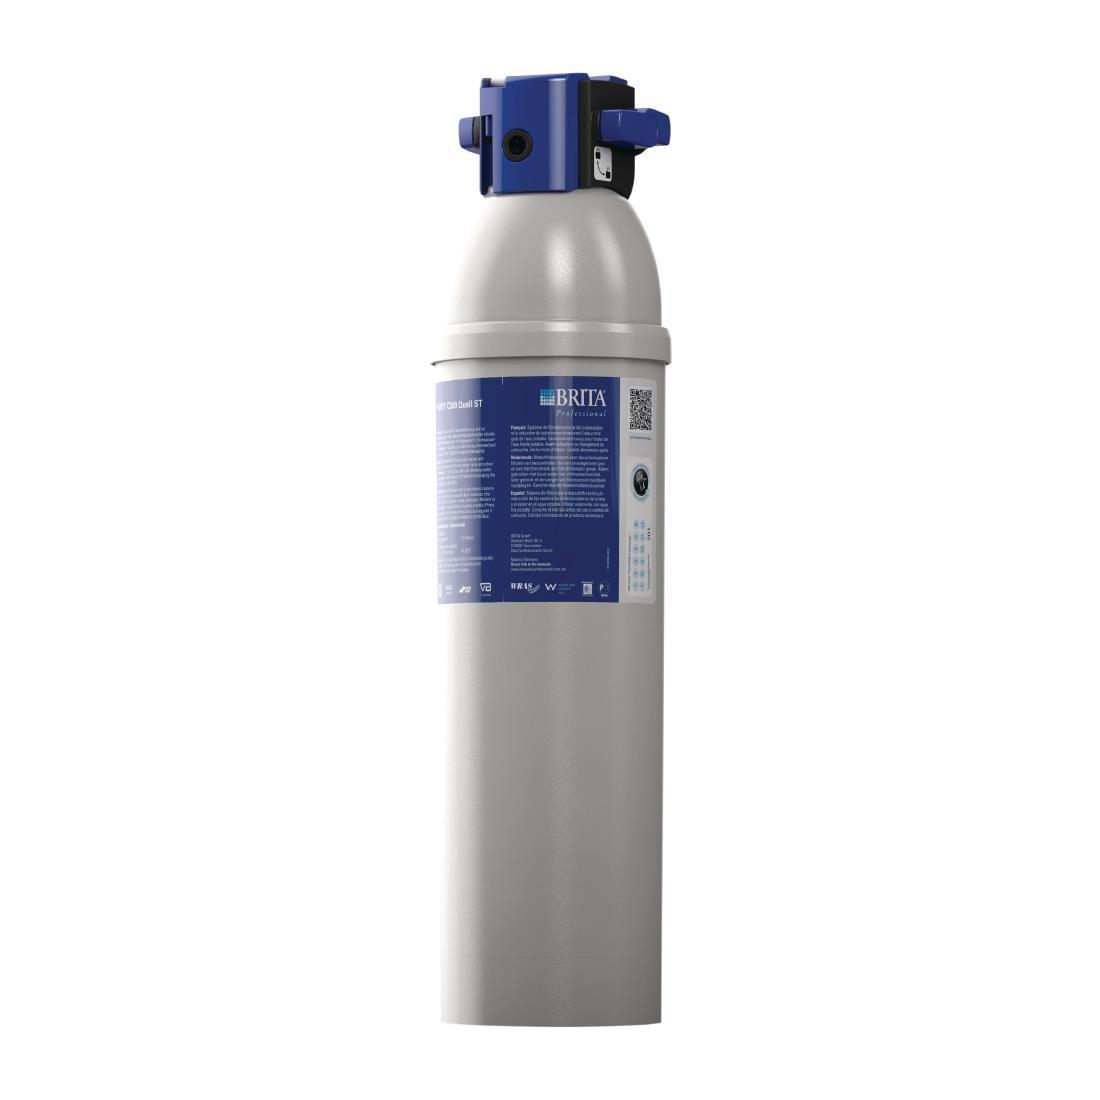 Brita Purity C 300 Water Filter System - HC556  - 2